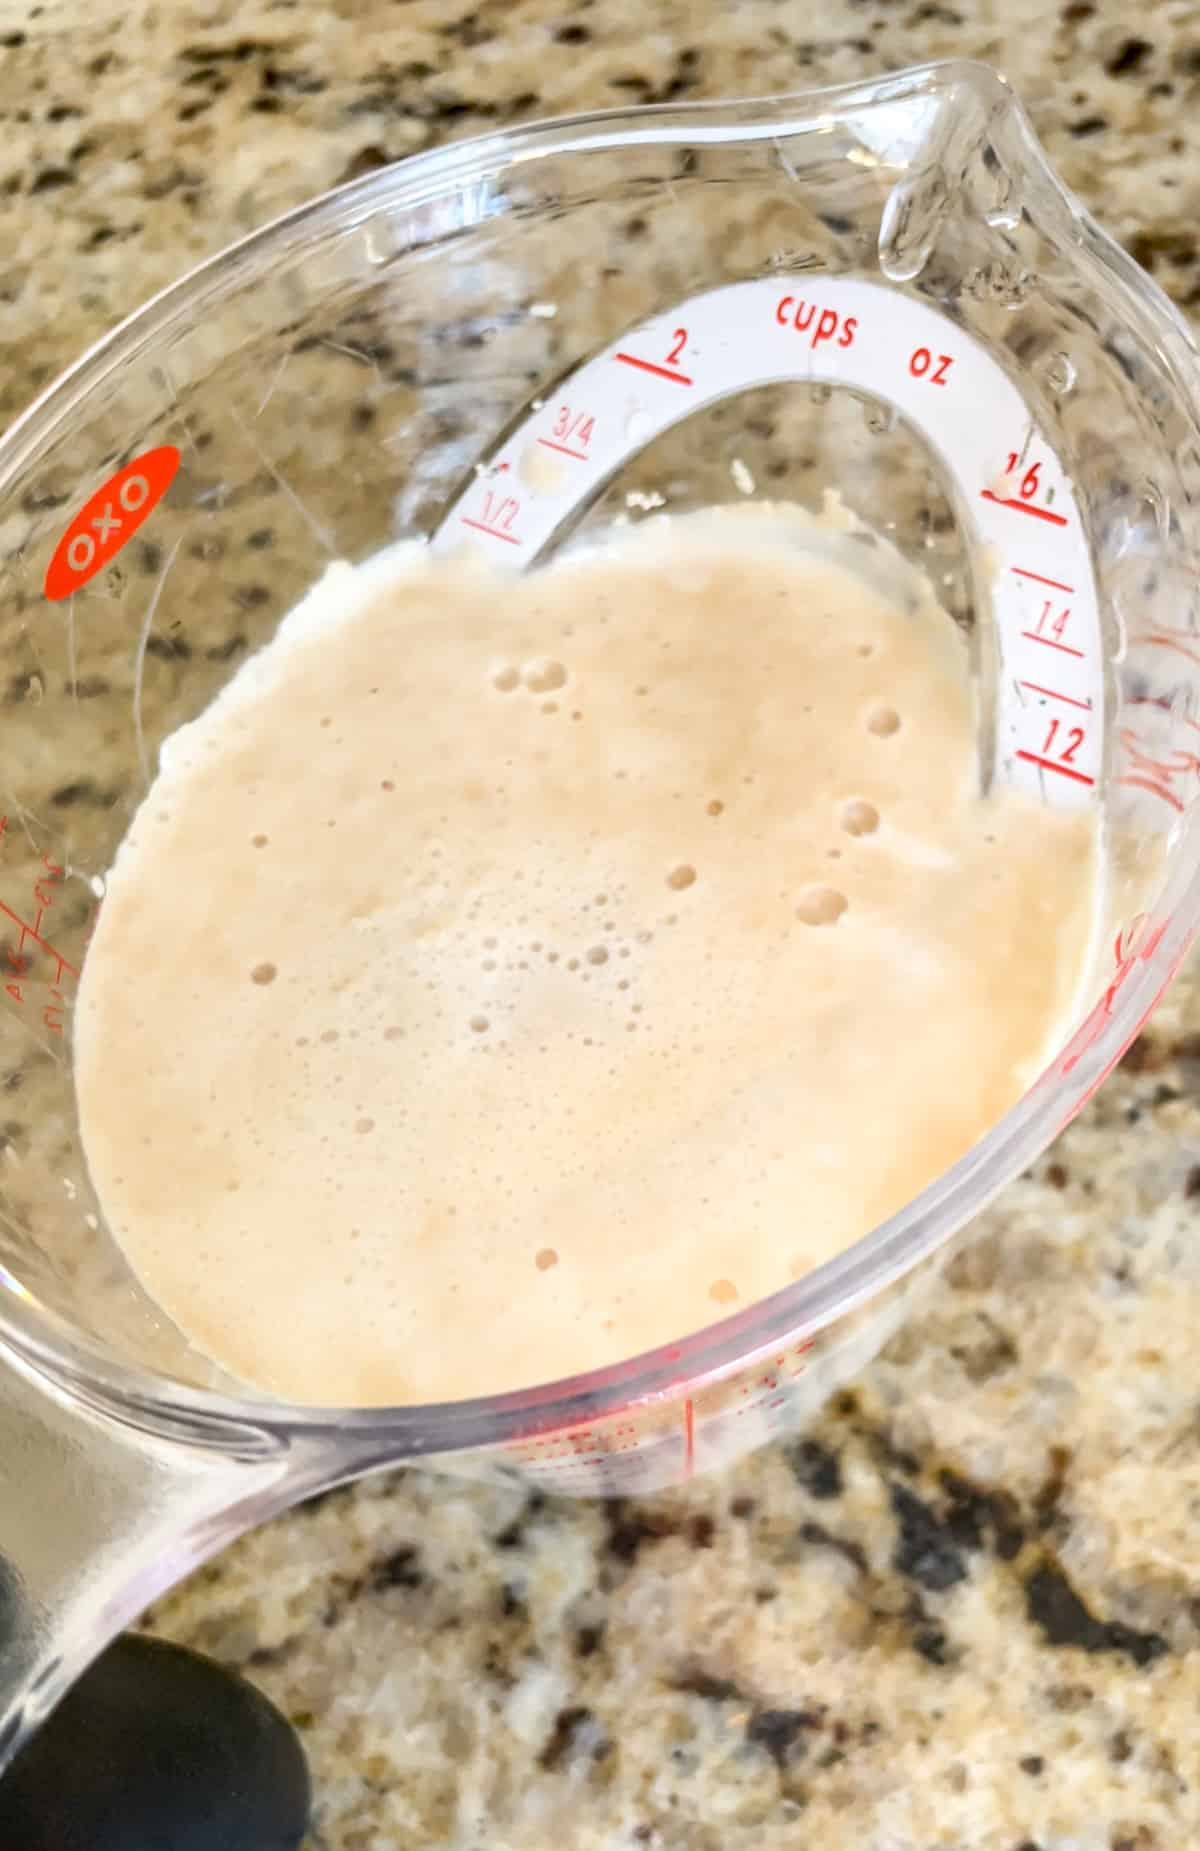 Foamy yeast water in a measuring cup.